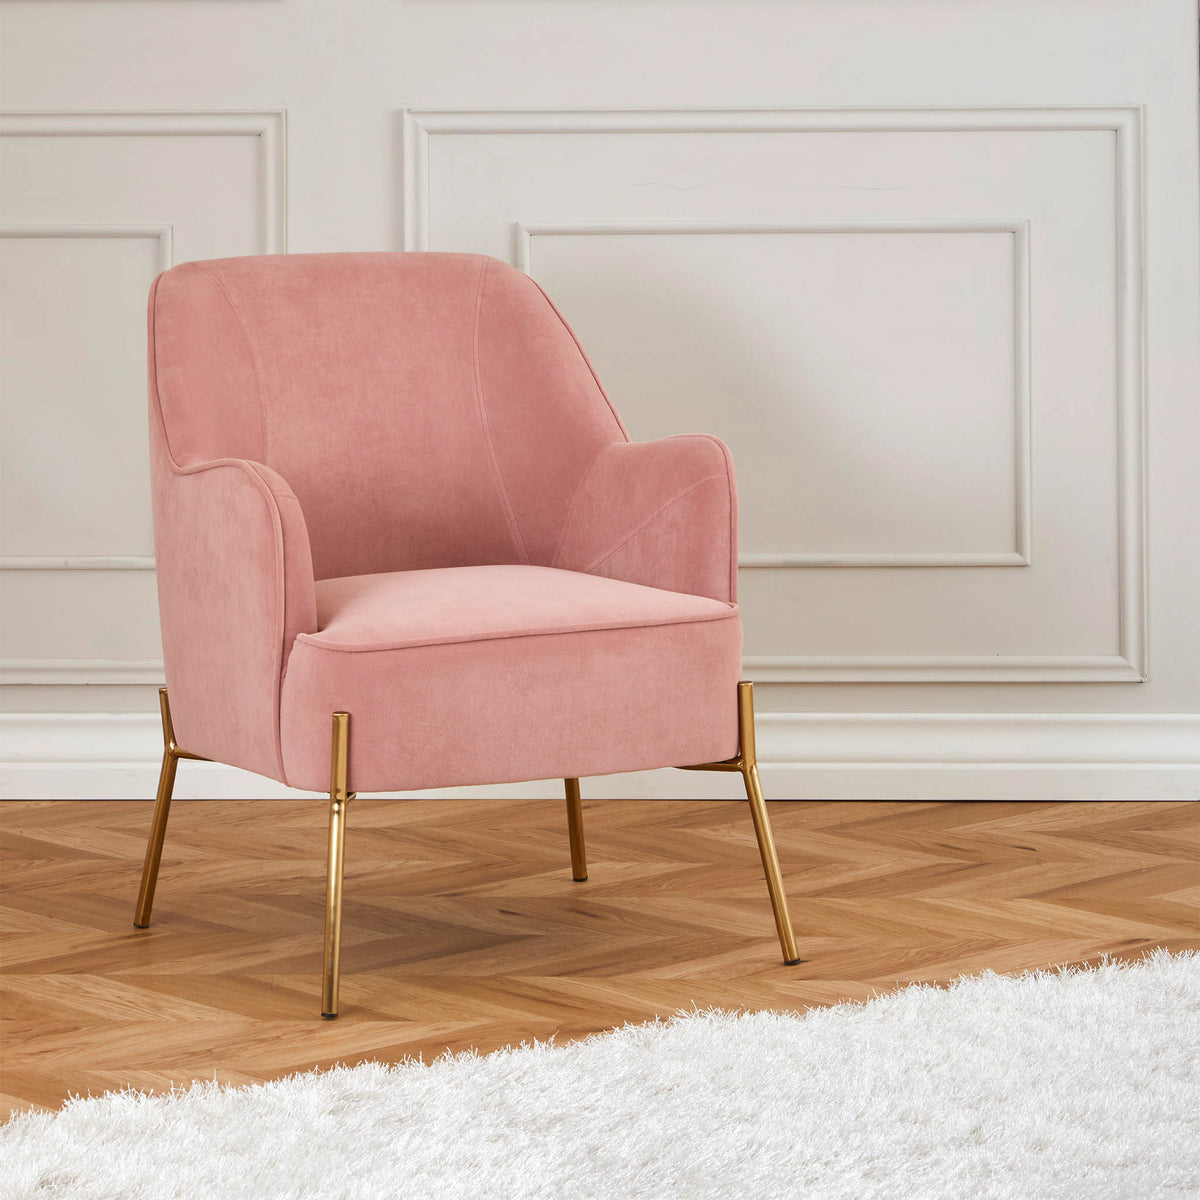 Delphine Pink Velvet Glam Accent Chair for living room or bedroom